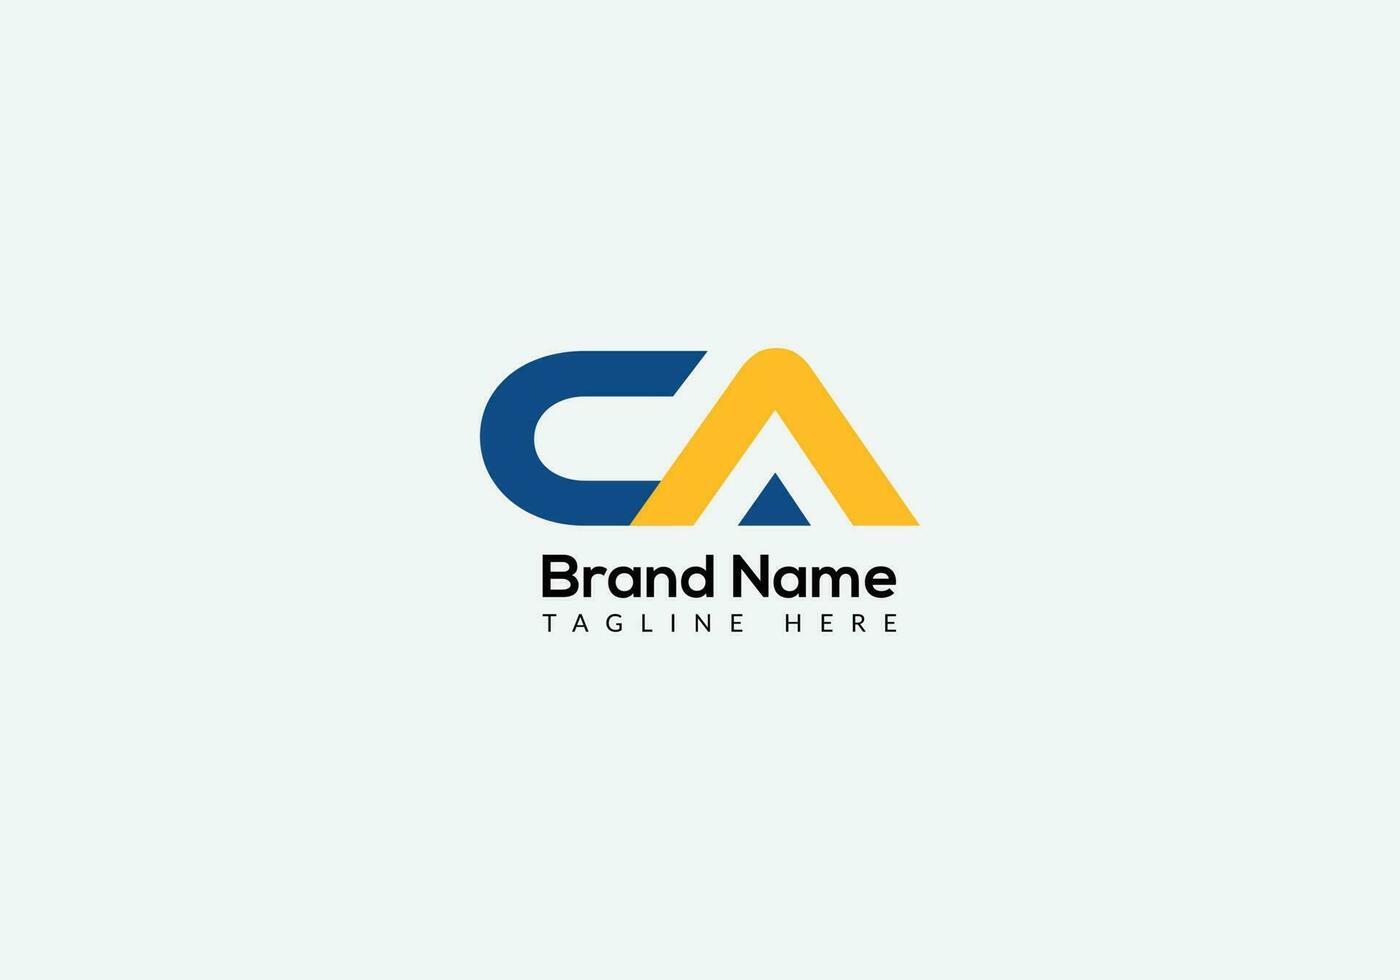 Abstract CA letter modern initial lettermarks logo design vector